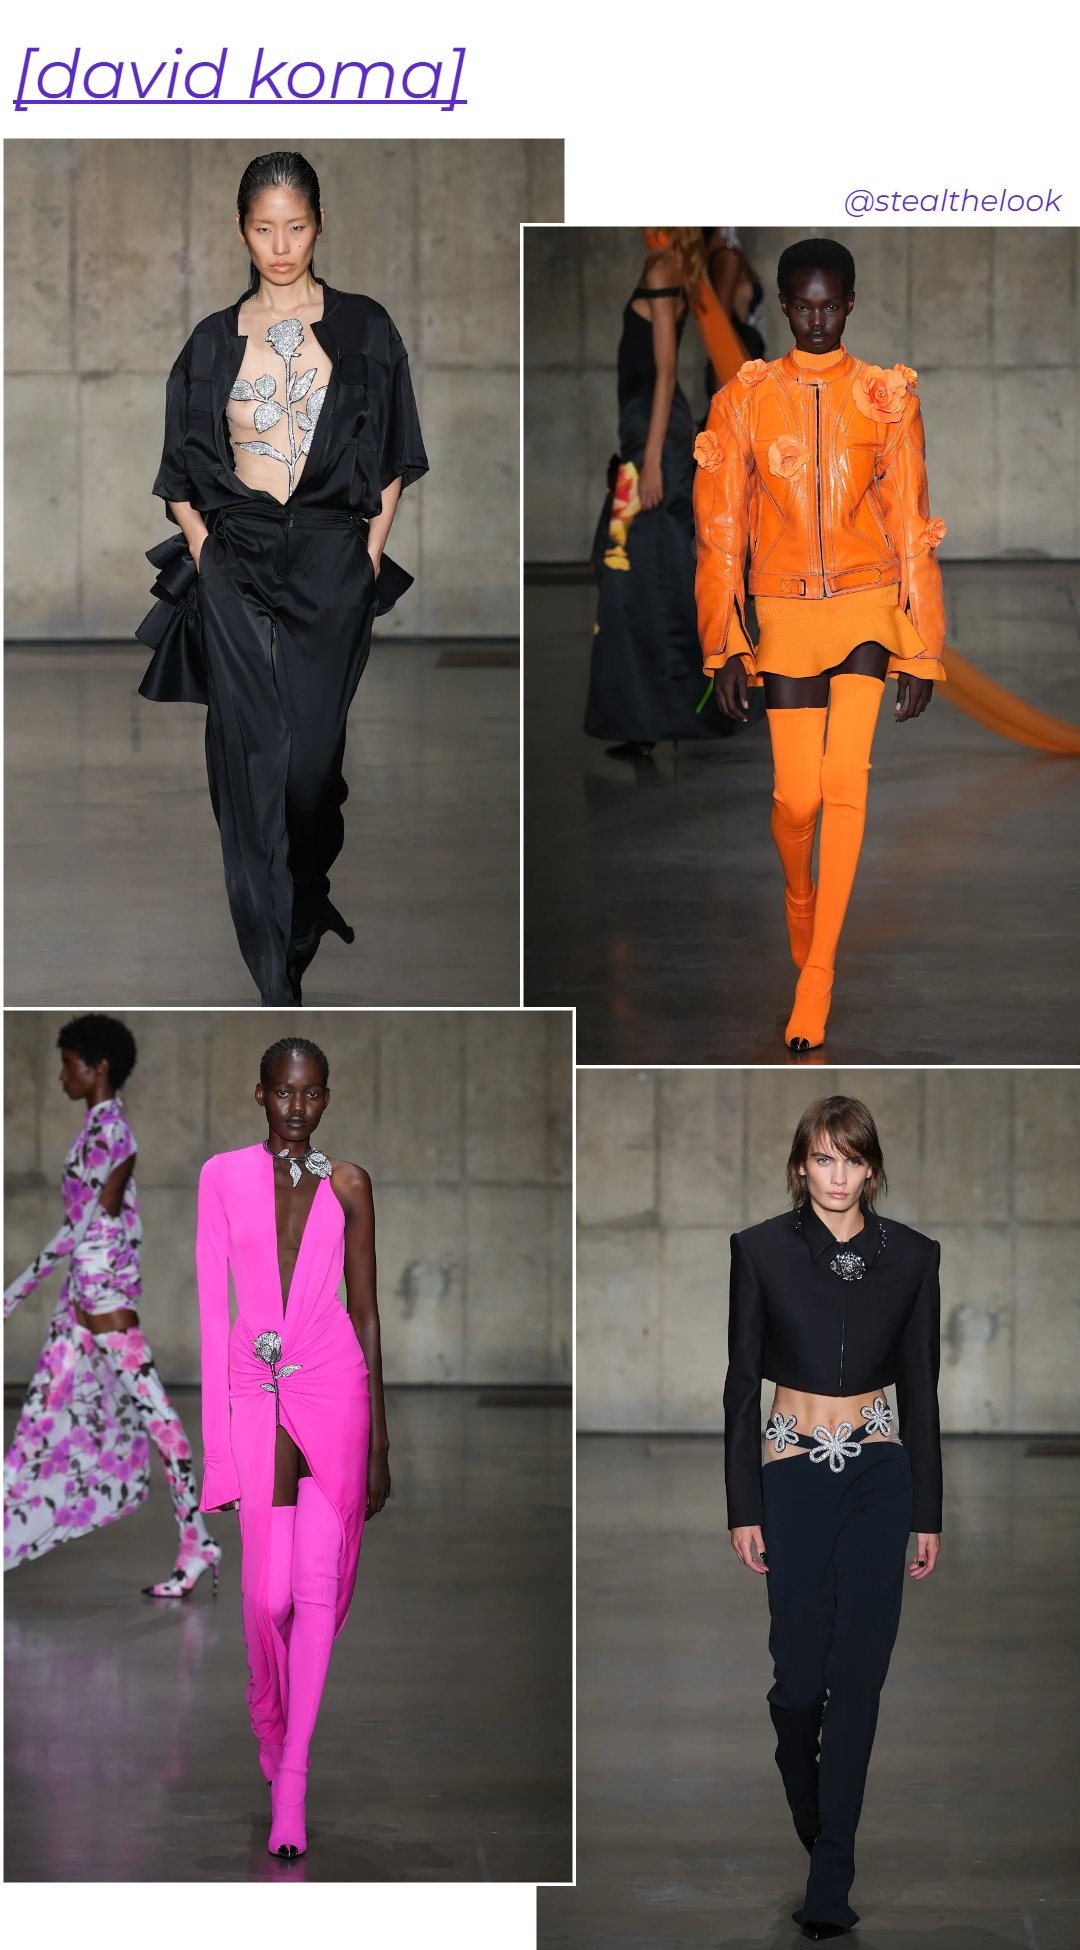 David Koma - roupas diversas - London Fashion Week - primavera - colagem de imagens - https://stealthelook.com.br